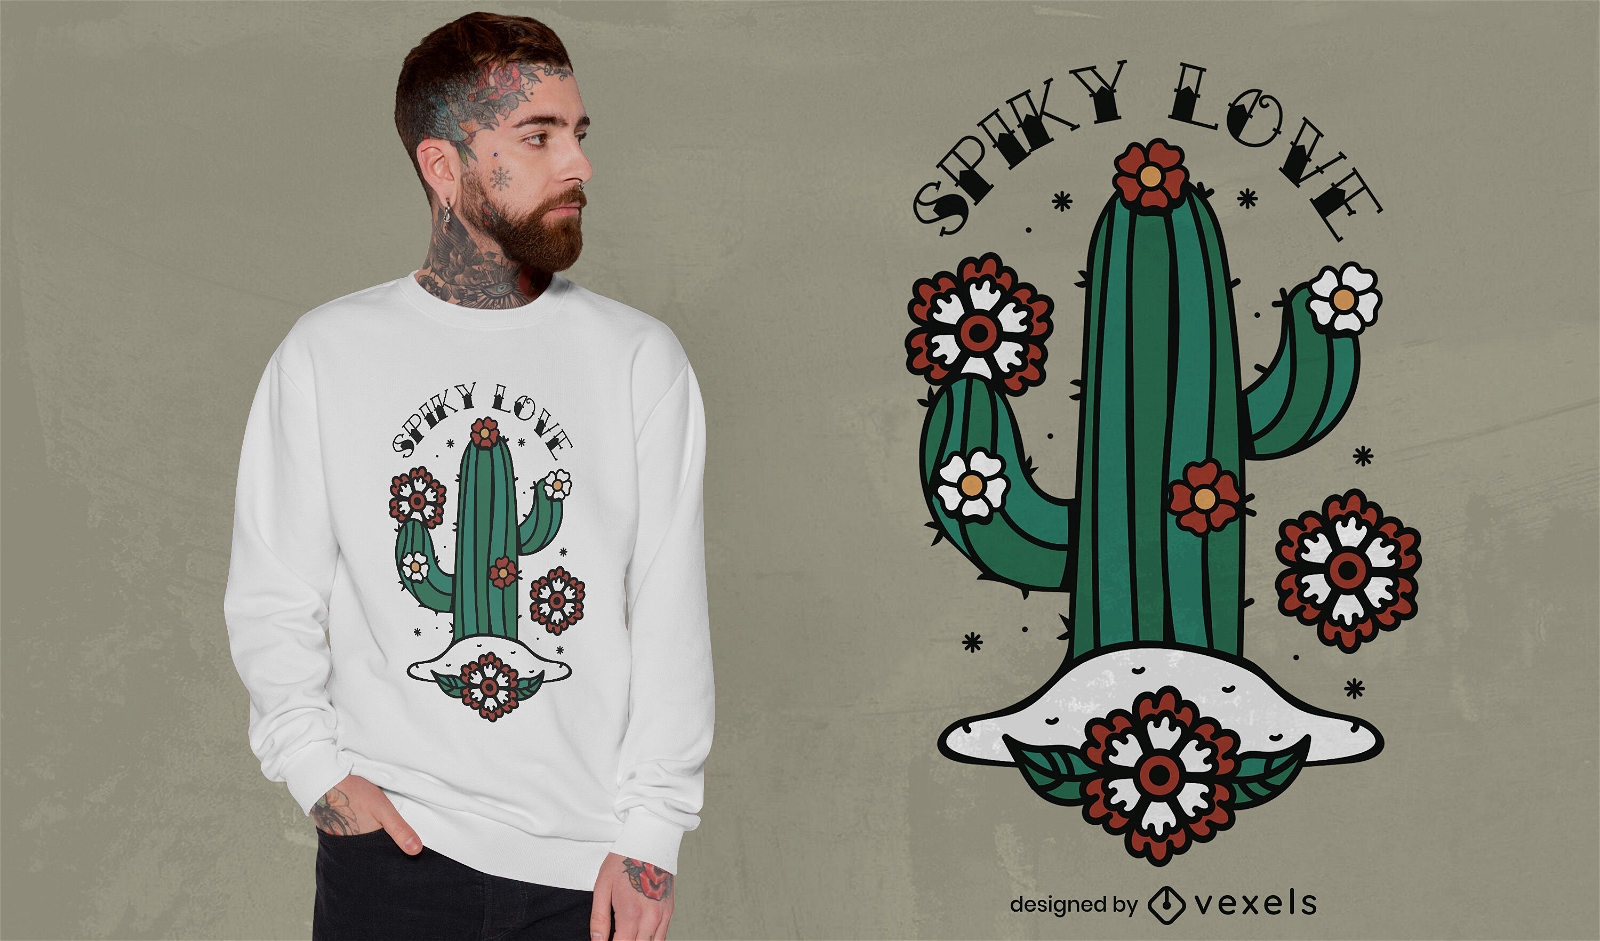 Spiky love cactus t-shirt design